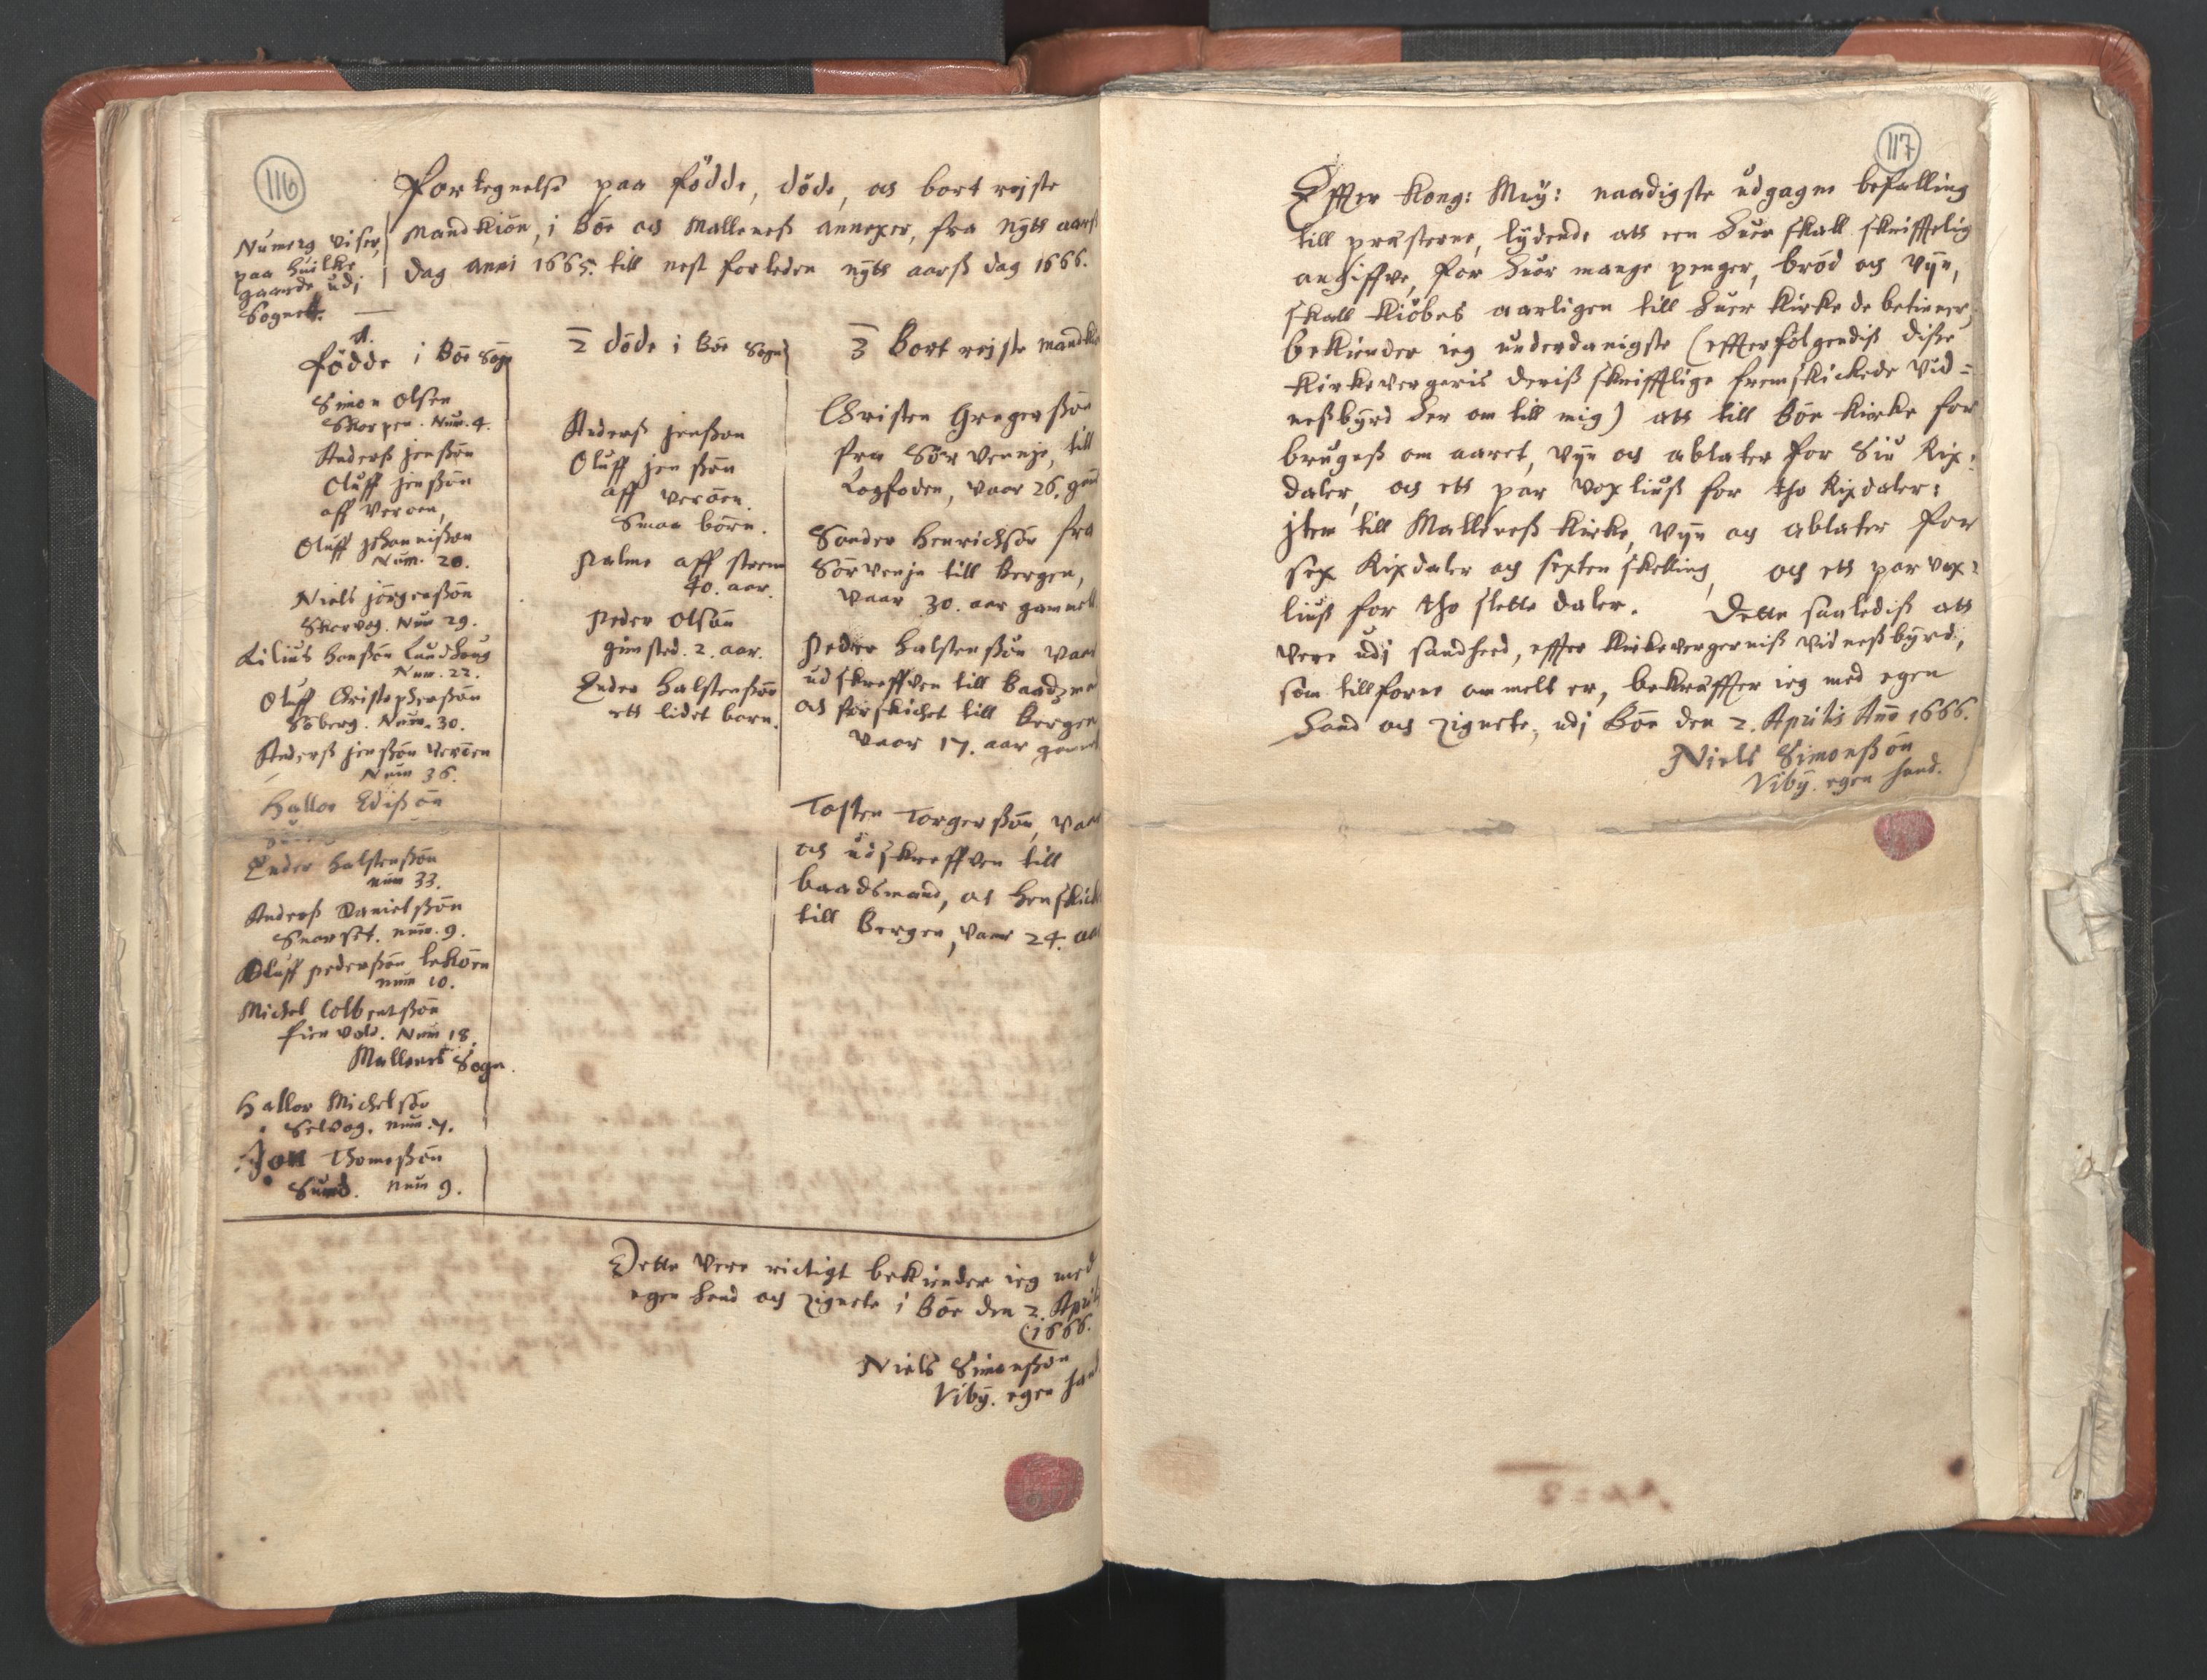 RA, Vicar's Census 1664-1666, no. 36: Lofoten and Vesterålen deanery, Senja deanery and Troms deanery, 1664-1666, p. 116-117